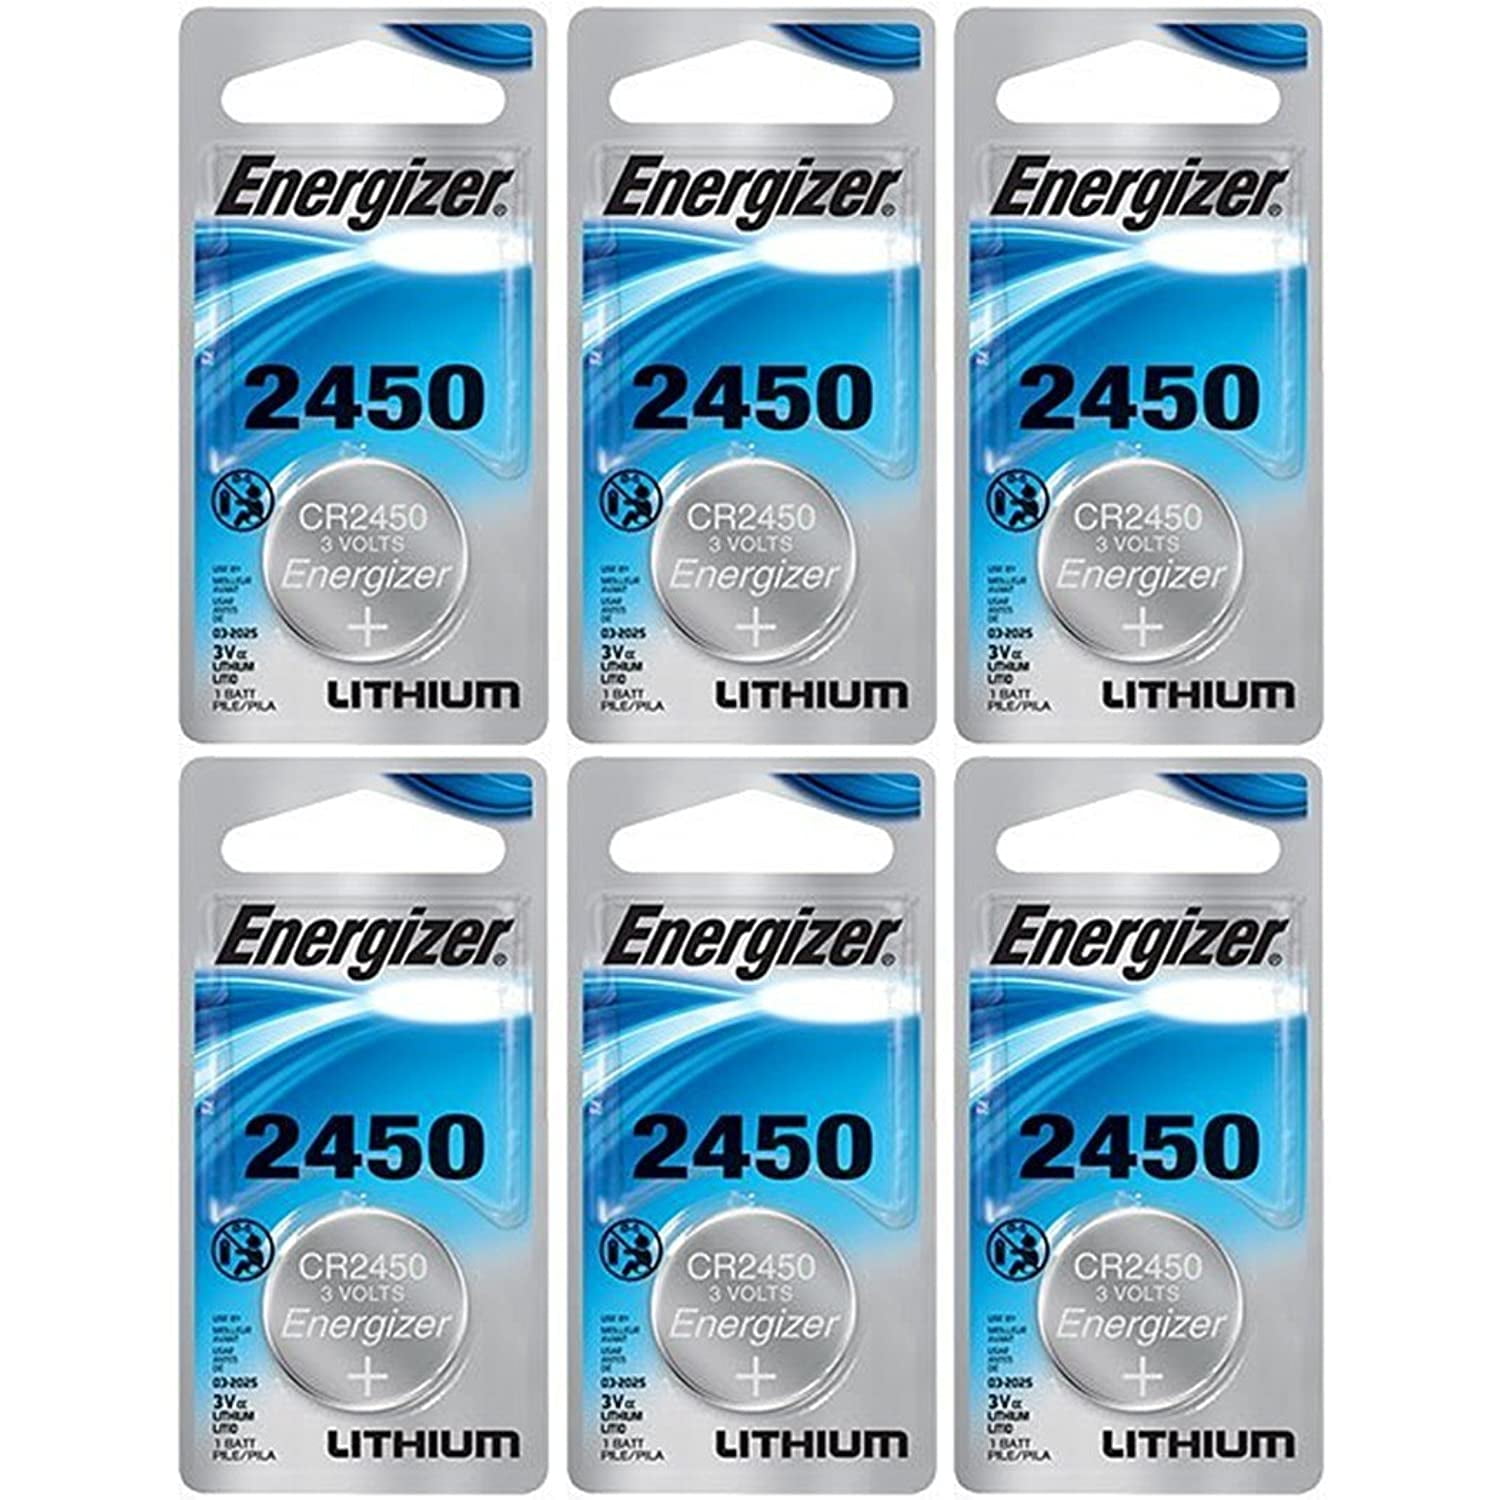 Energizer CR2450 Lithium Battery, 3v ECR2450, Qty 6 - Walmart.com